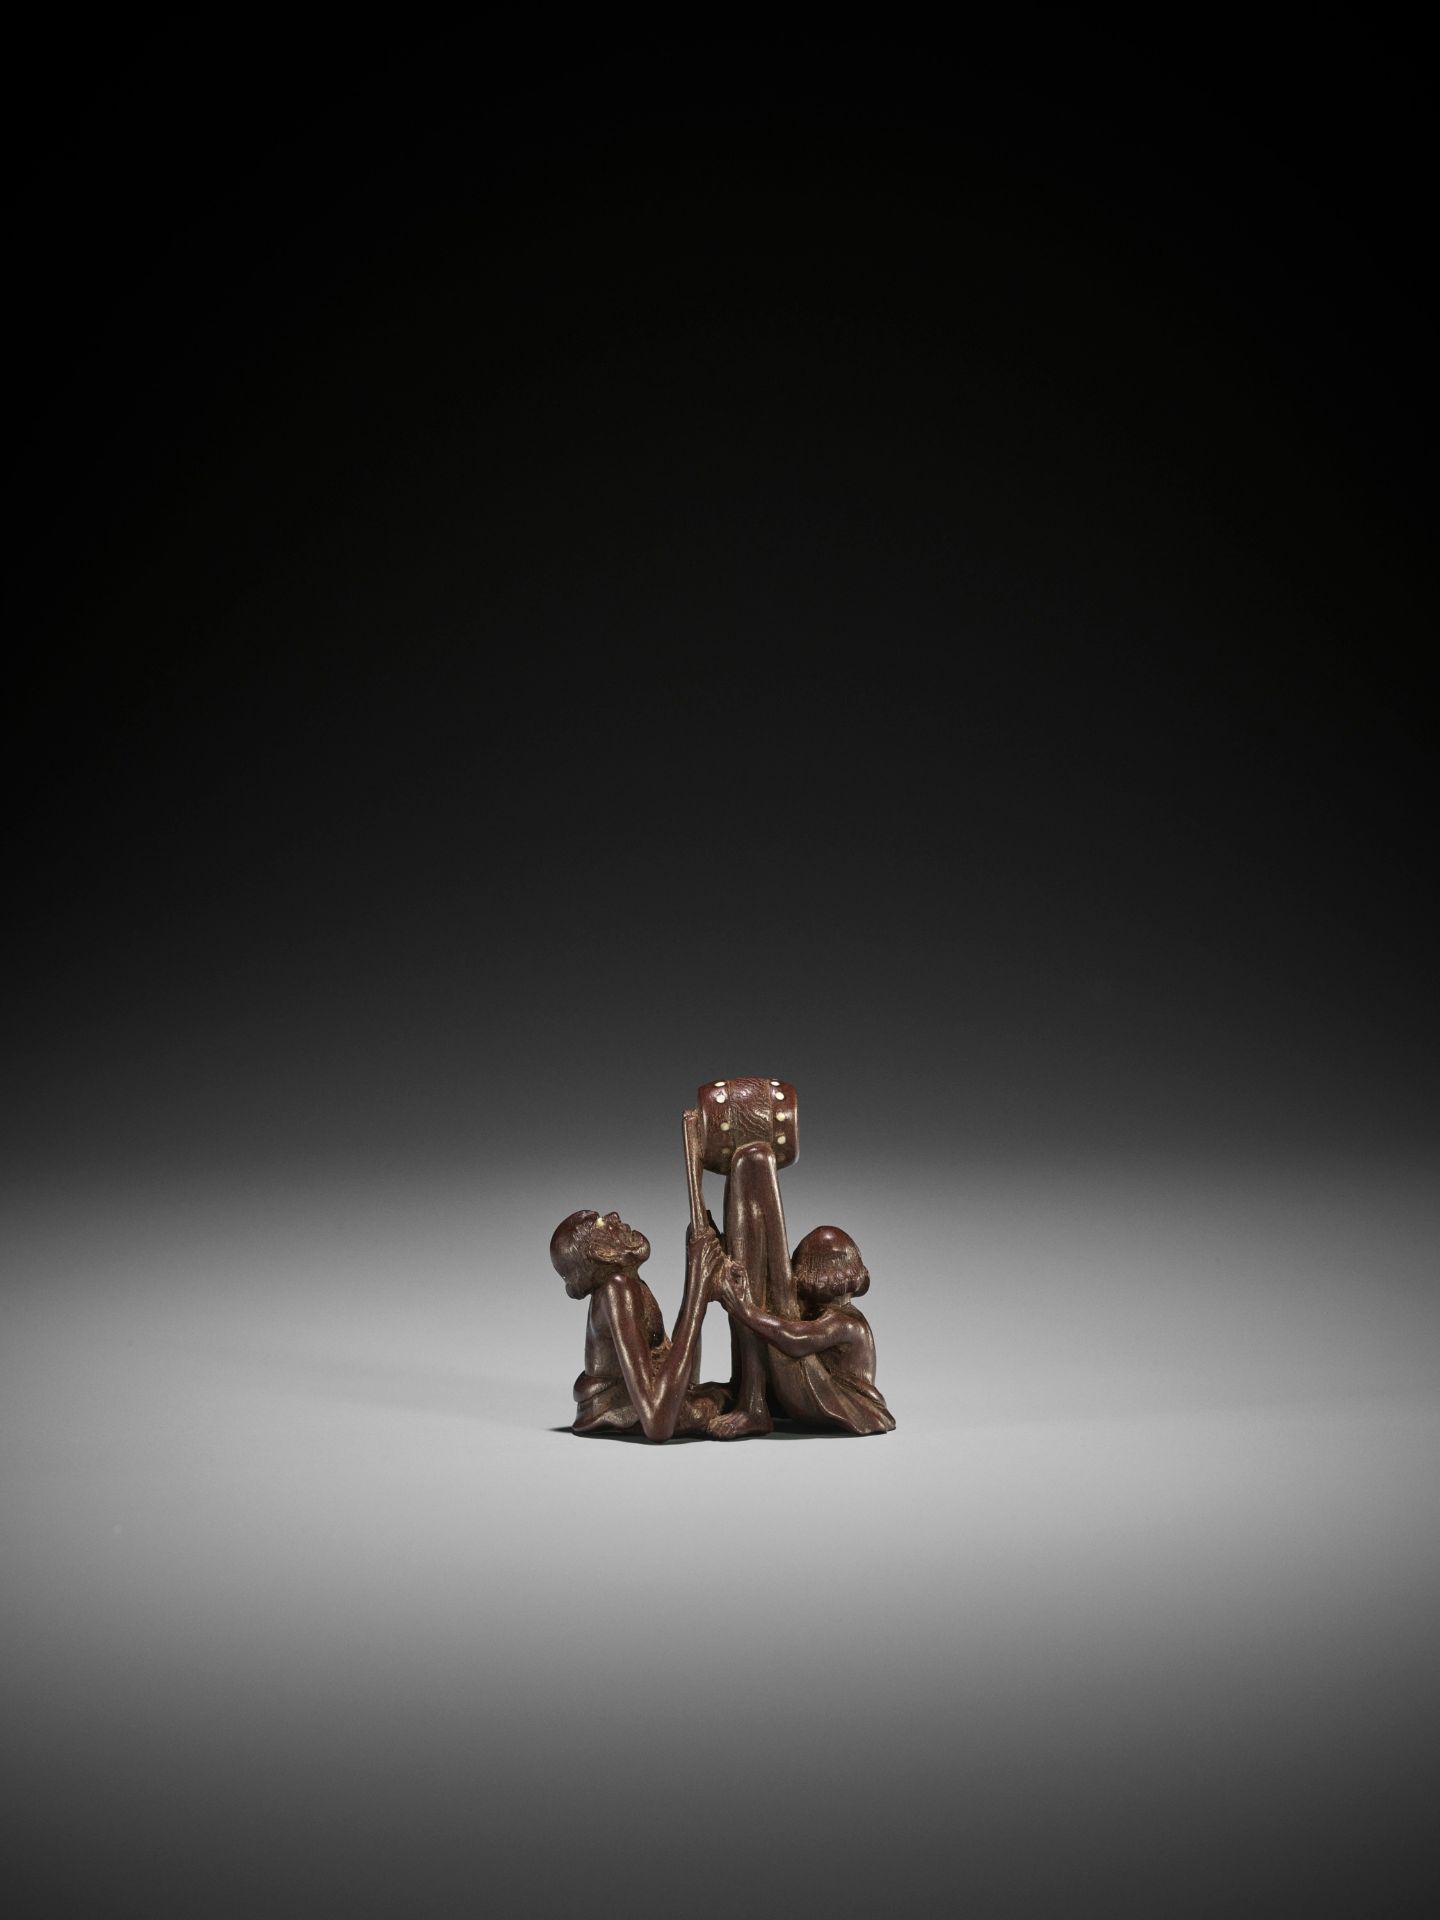 RAKUMIN: AN AMUSING WOOD NETSUKE OF ASHINAGA AND TENAGA PLAYING A DRUM - Image 3 of 11